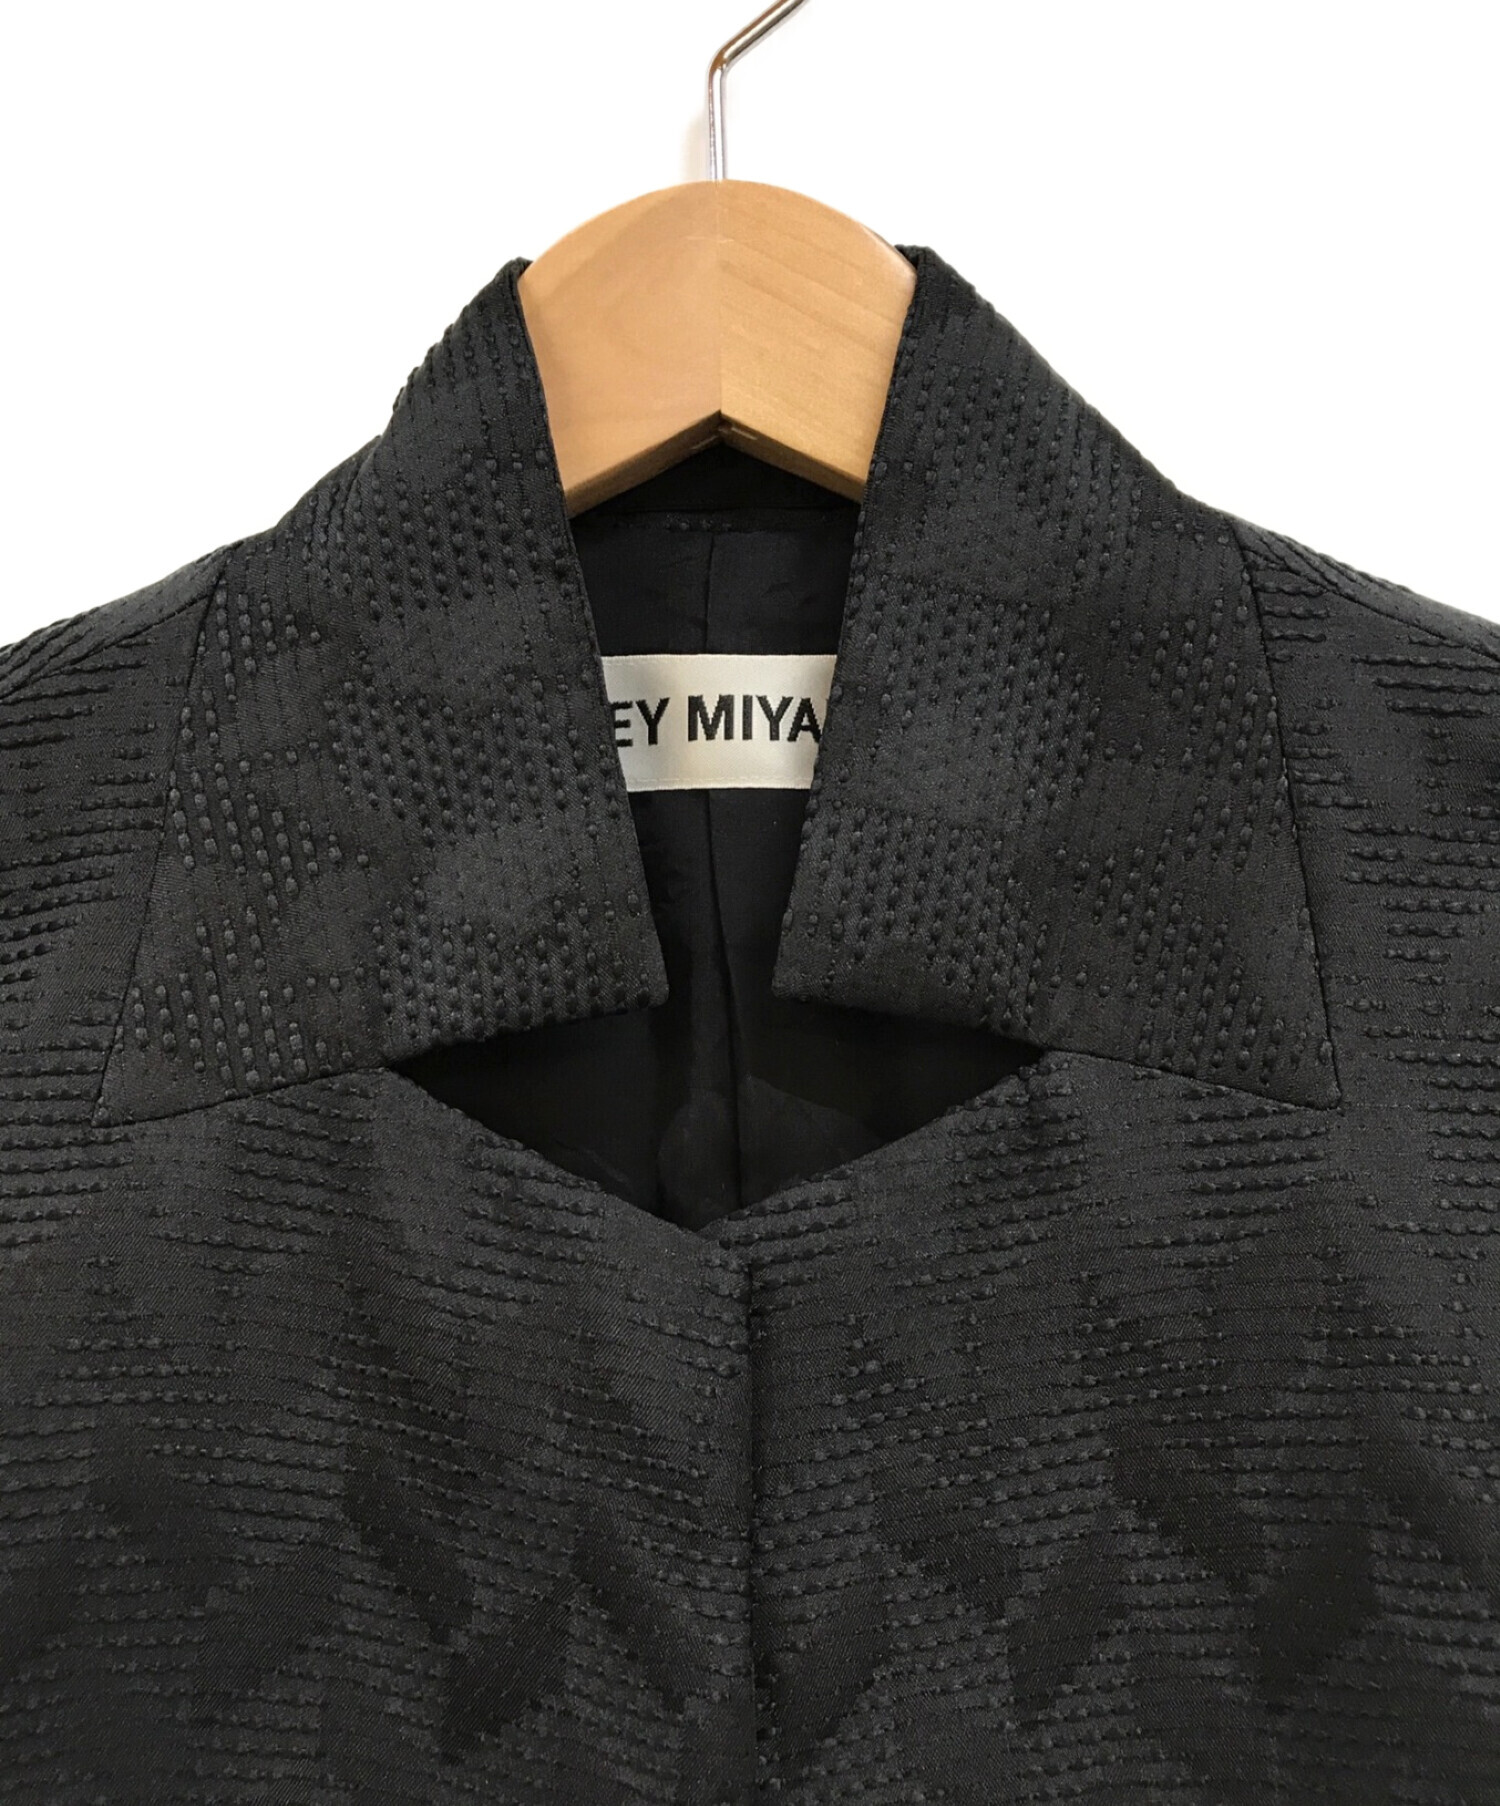 ISSEY MIYAKE (イッセイミヤケ) ジャガードノーカラージャケット ブラック サイズ:2